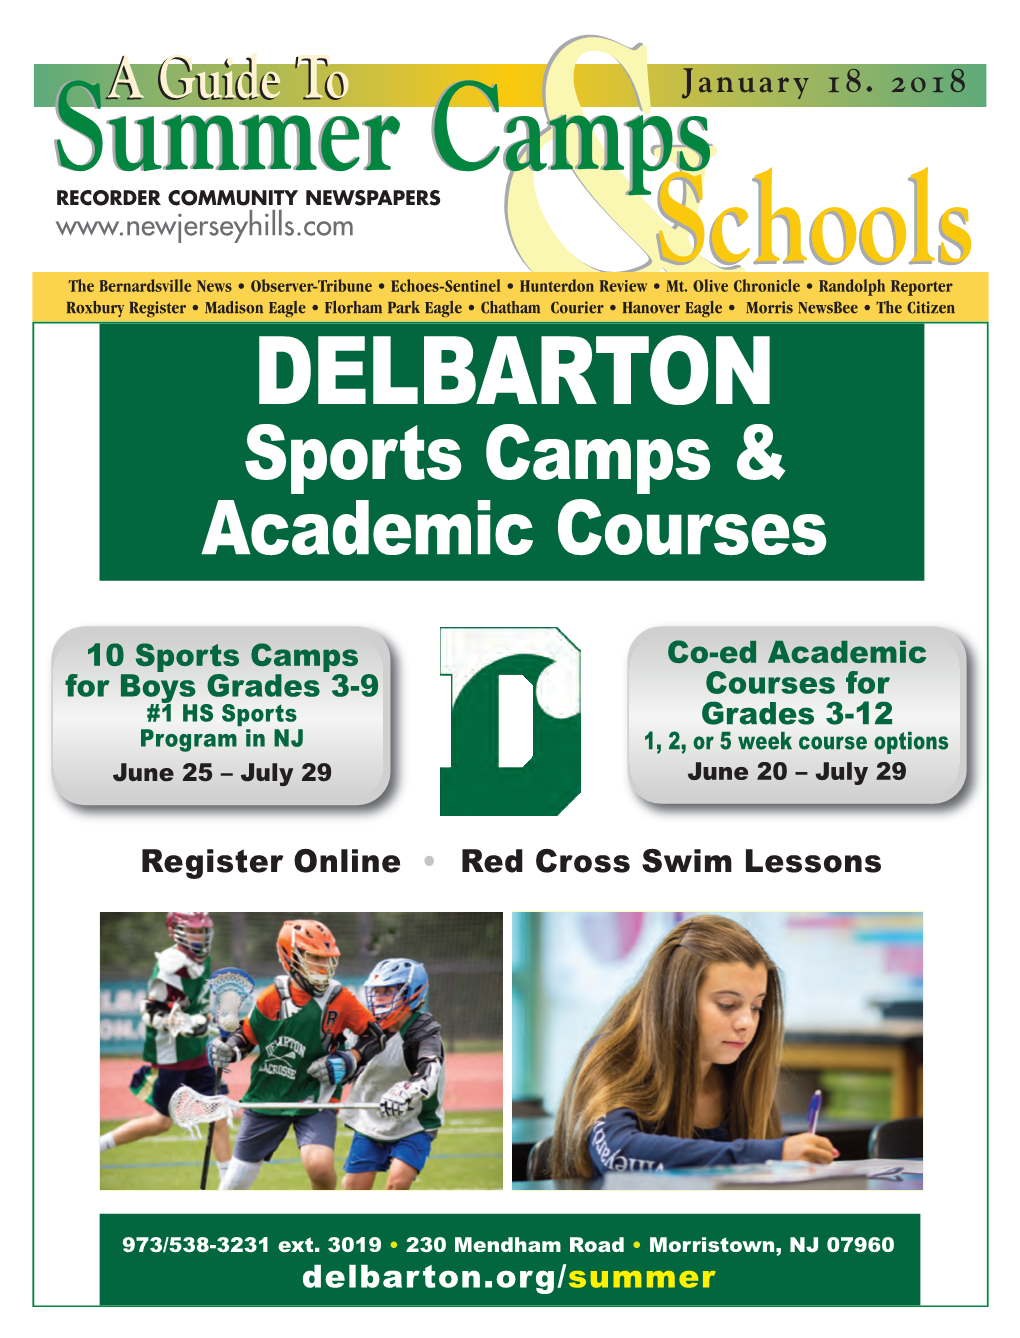 DELBARTON Sports Camps & Academic Courses